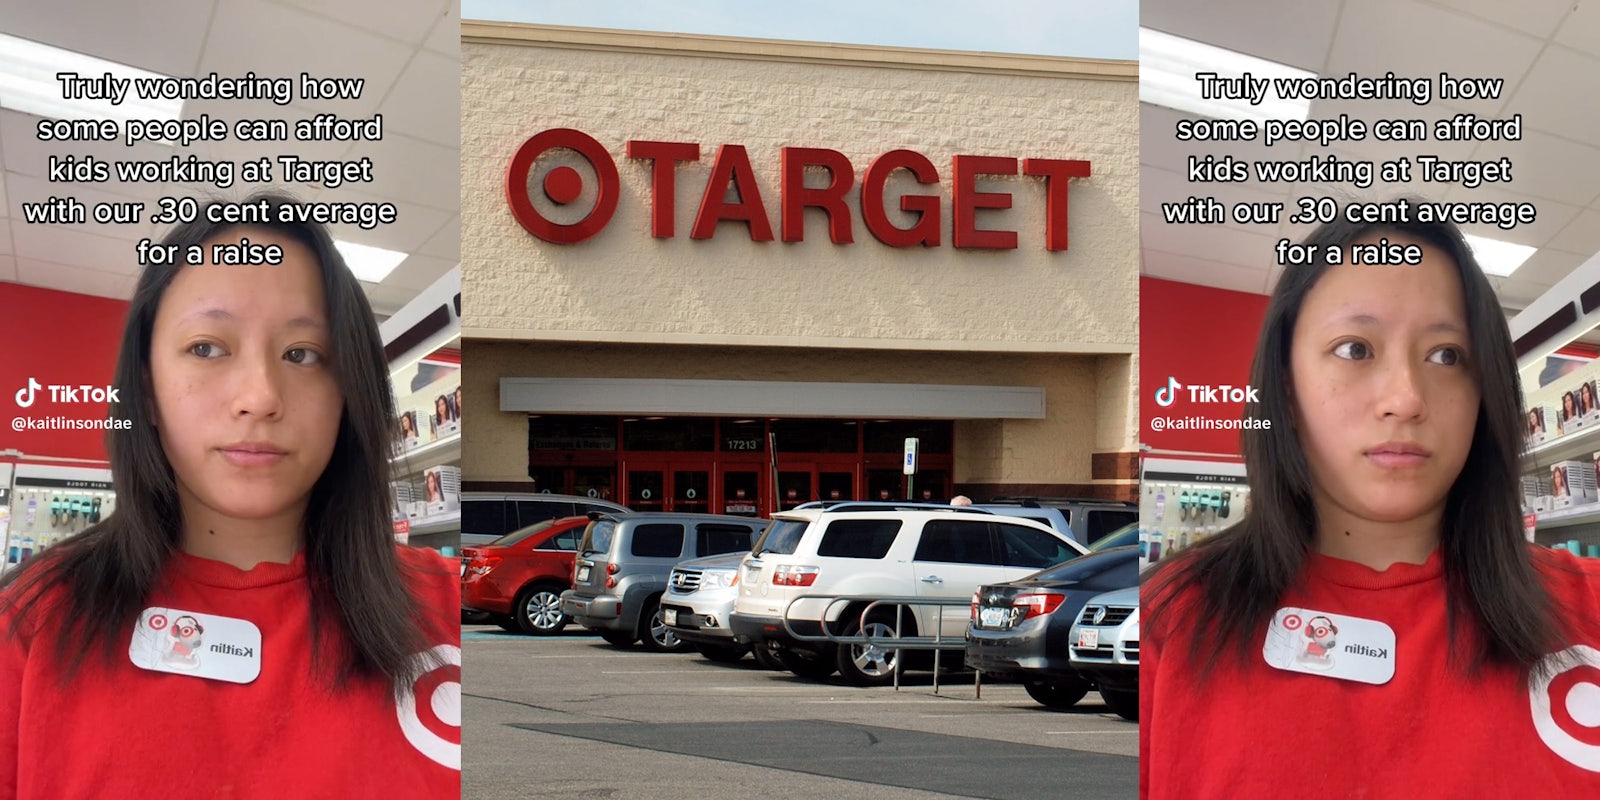 target worker wondering how people can afford kids working at Target